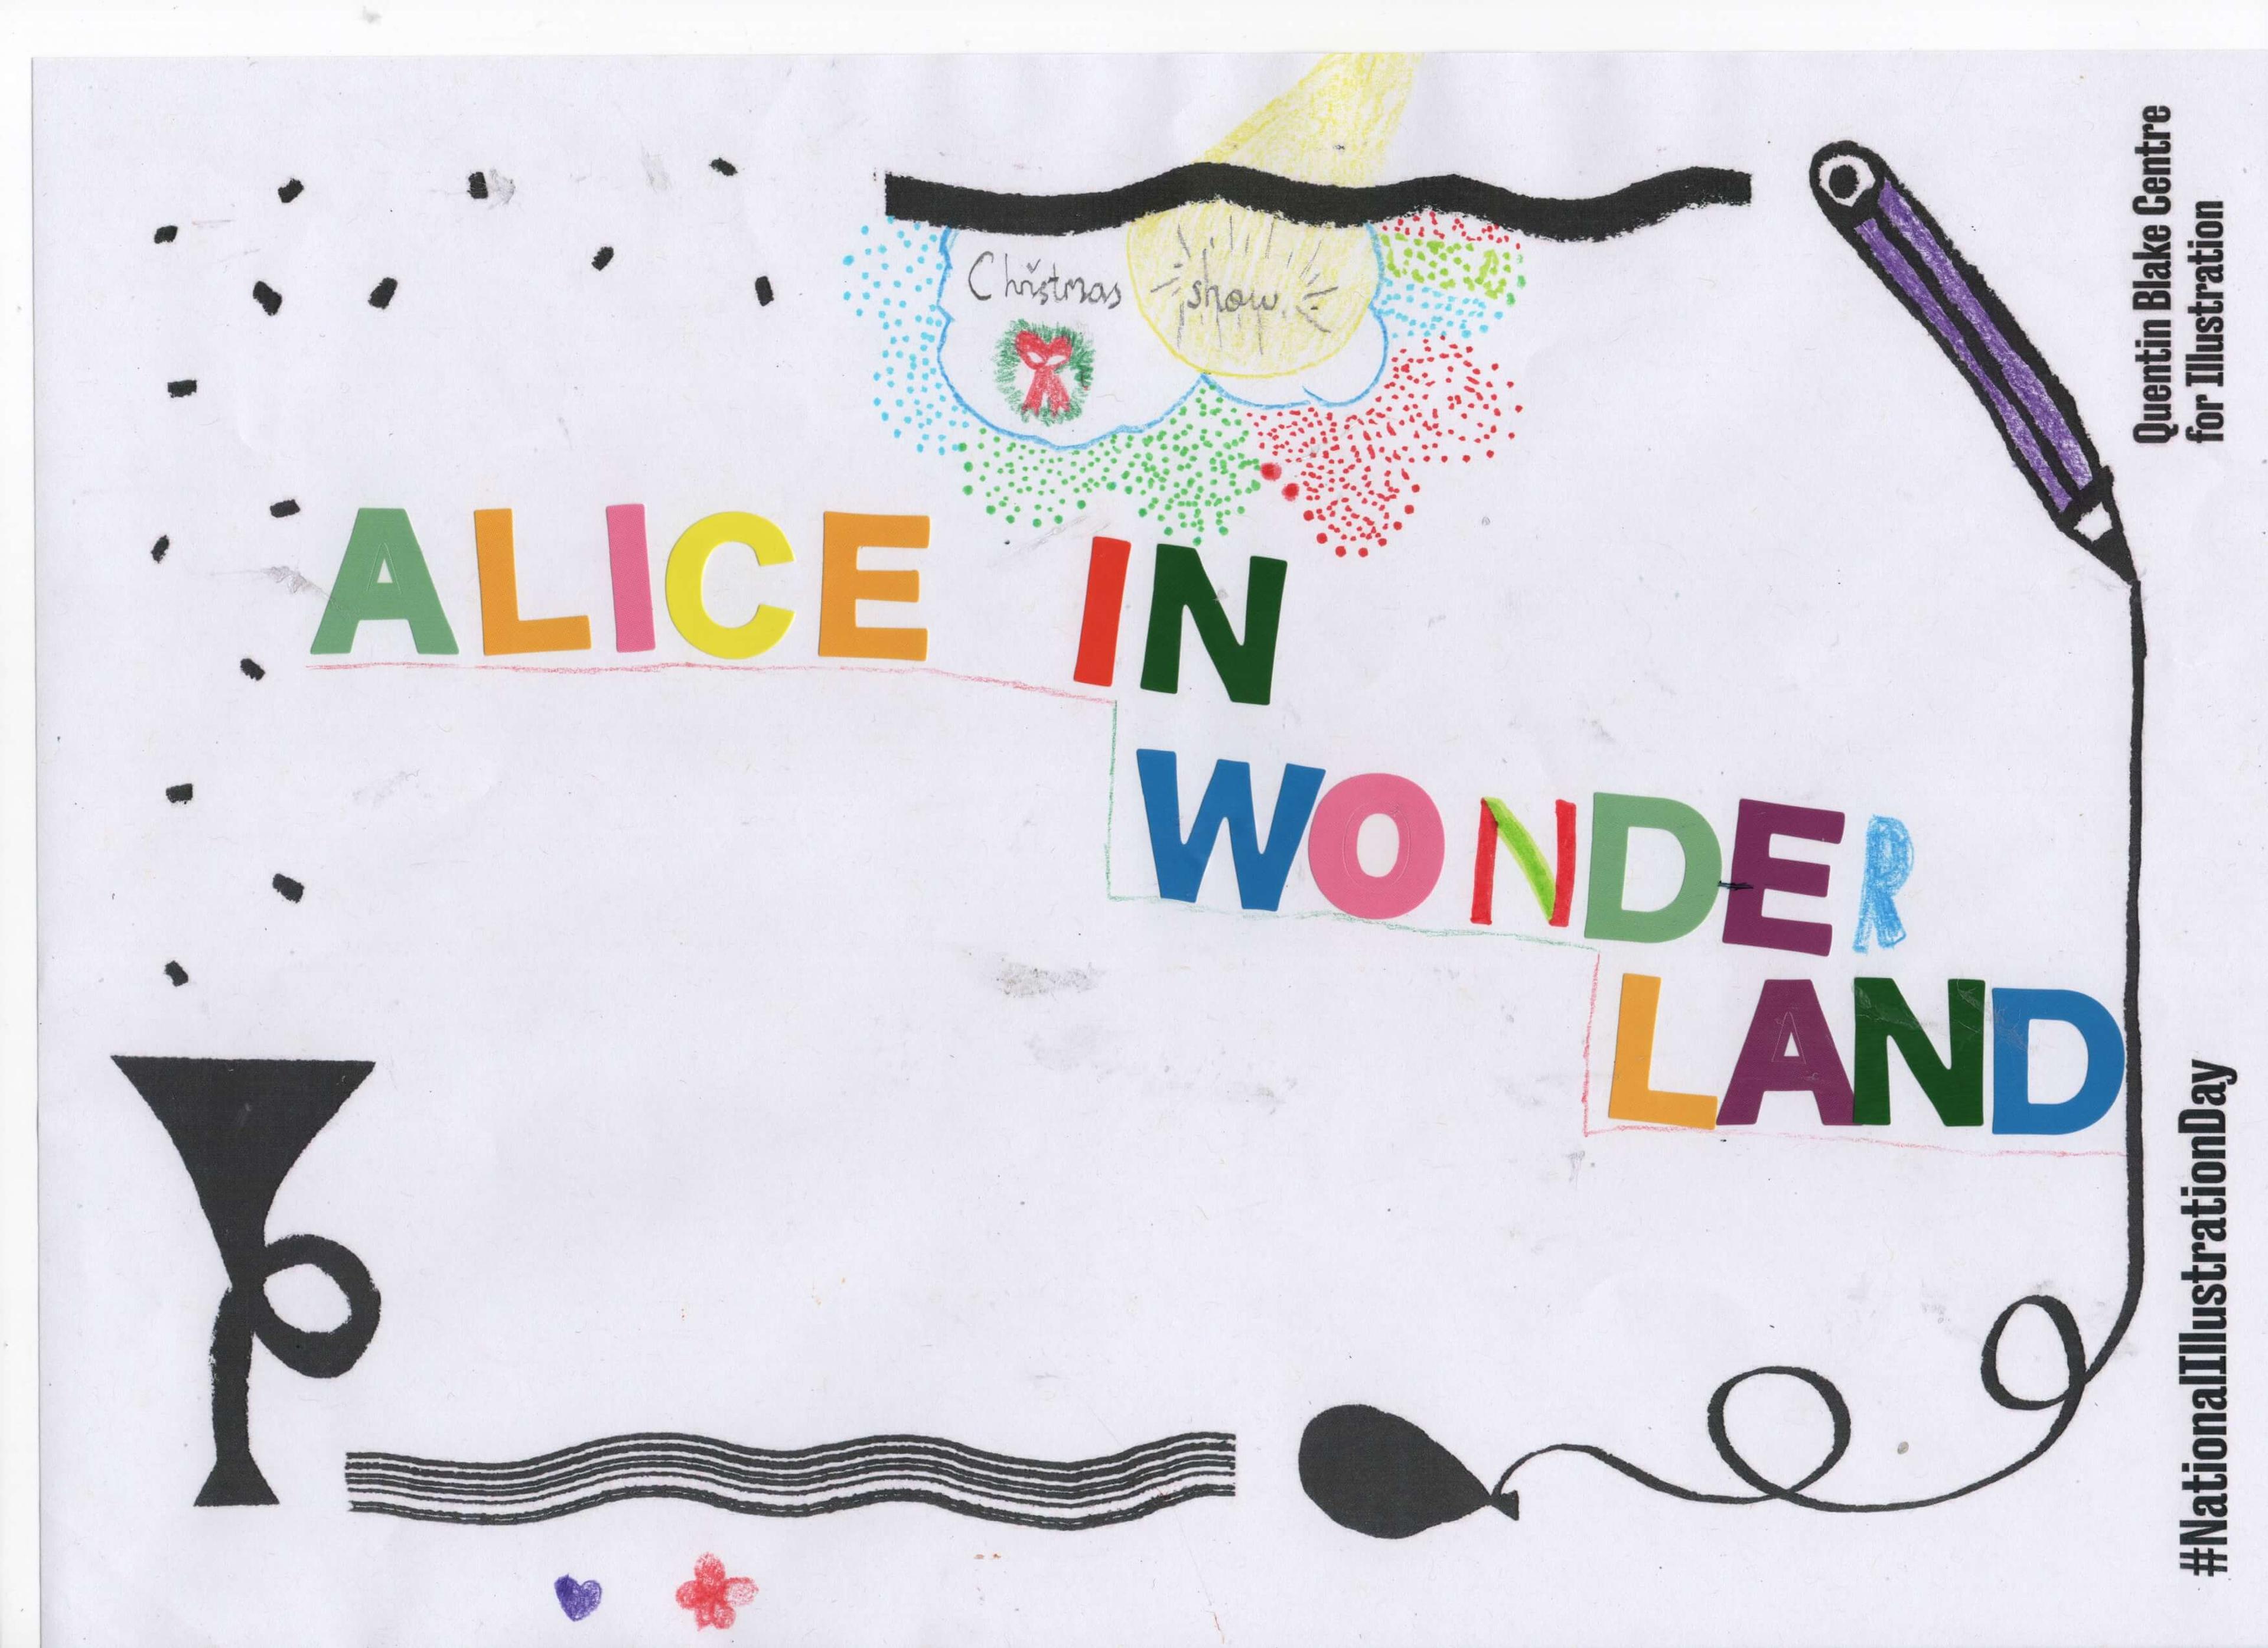 'Alice in Wonderland' stuck on using colourful alphabet stickers. 